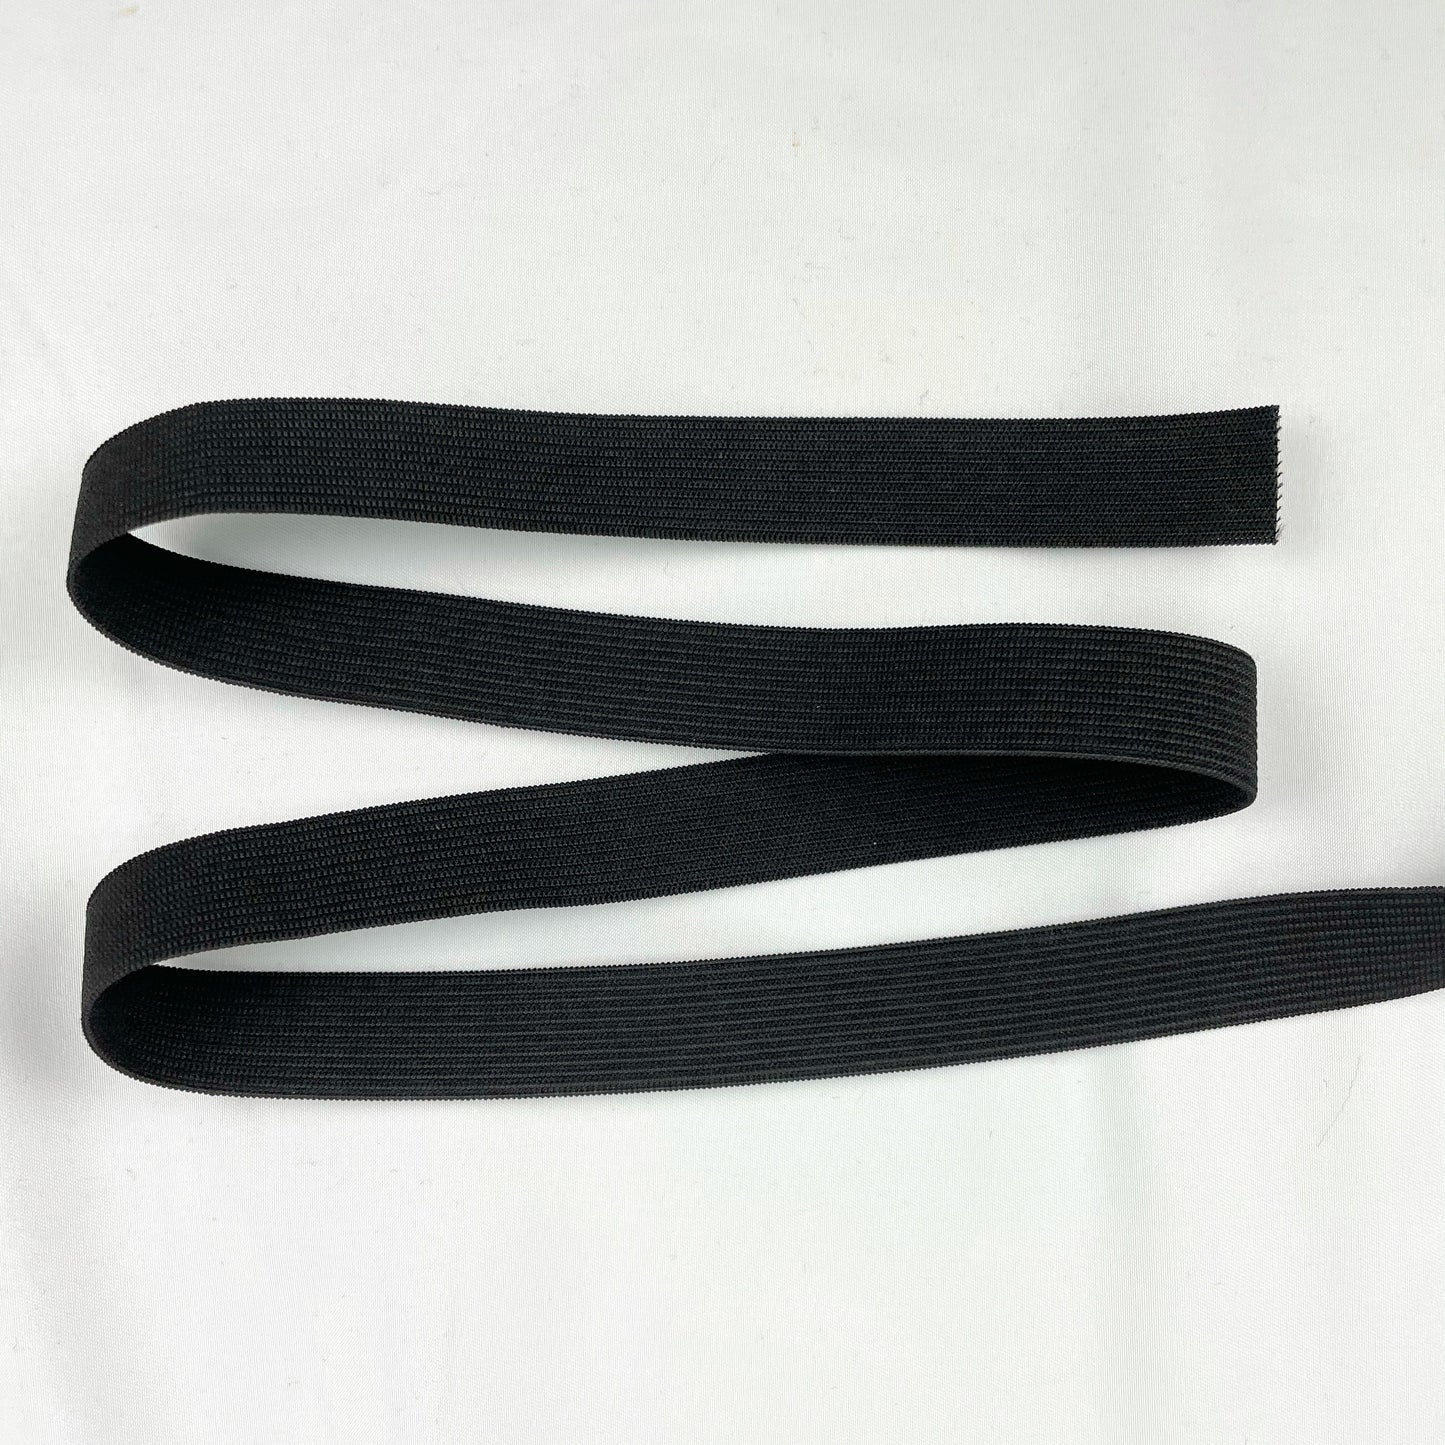 19mm (3/4") Soft Pre-Shrunk Knitted Elastic - Black